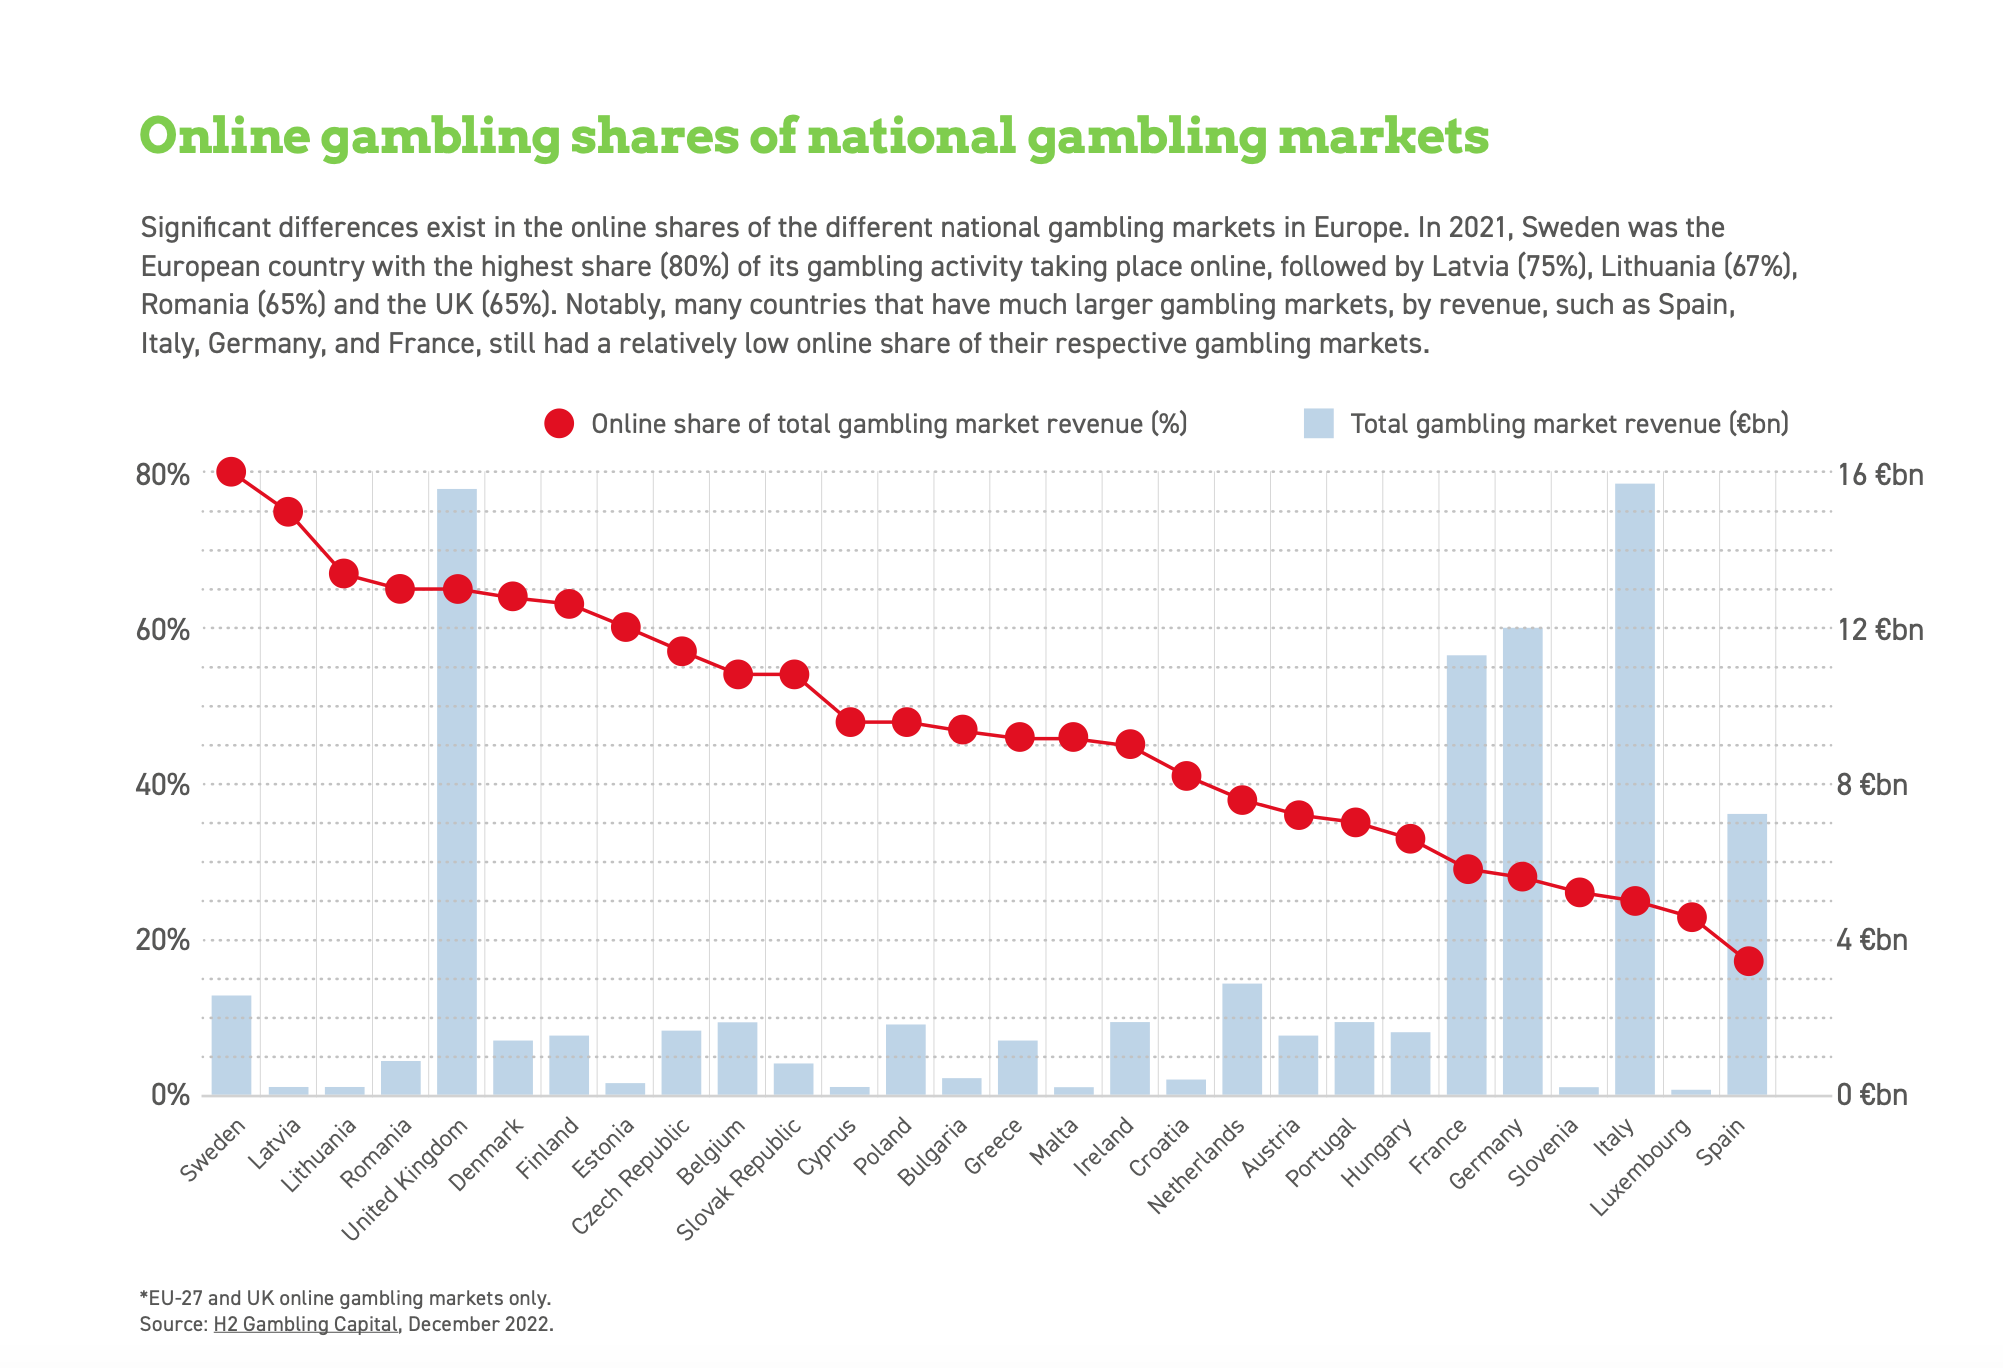 Online gambling shares of national gambling markets (2021)